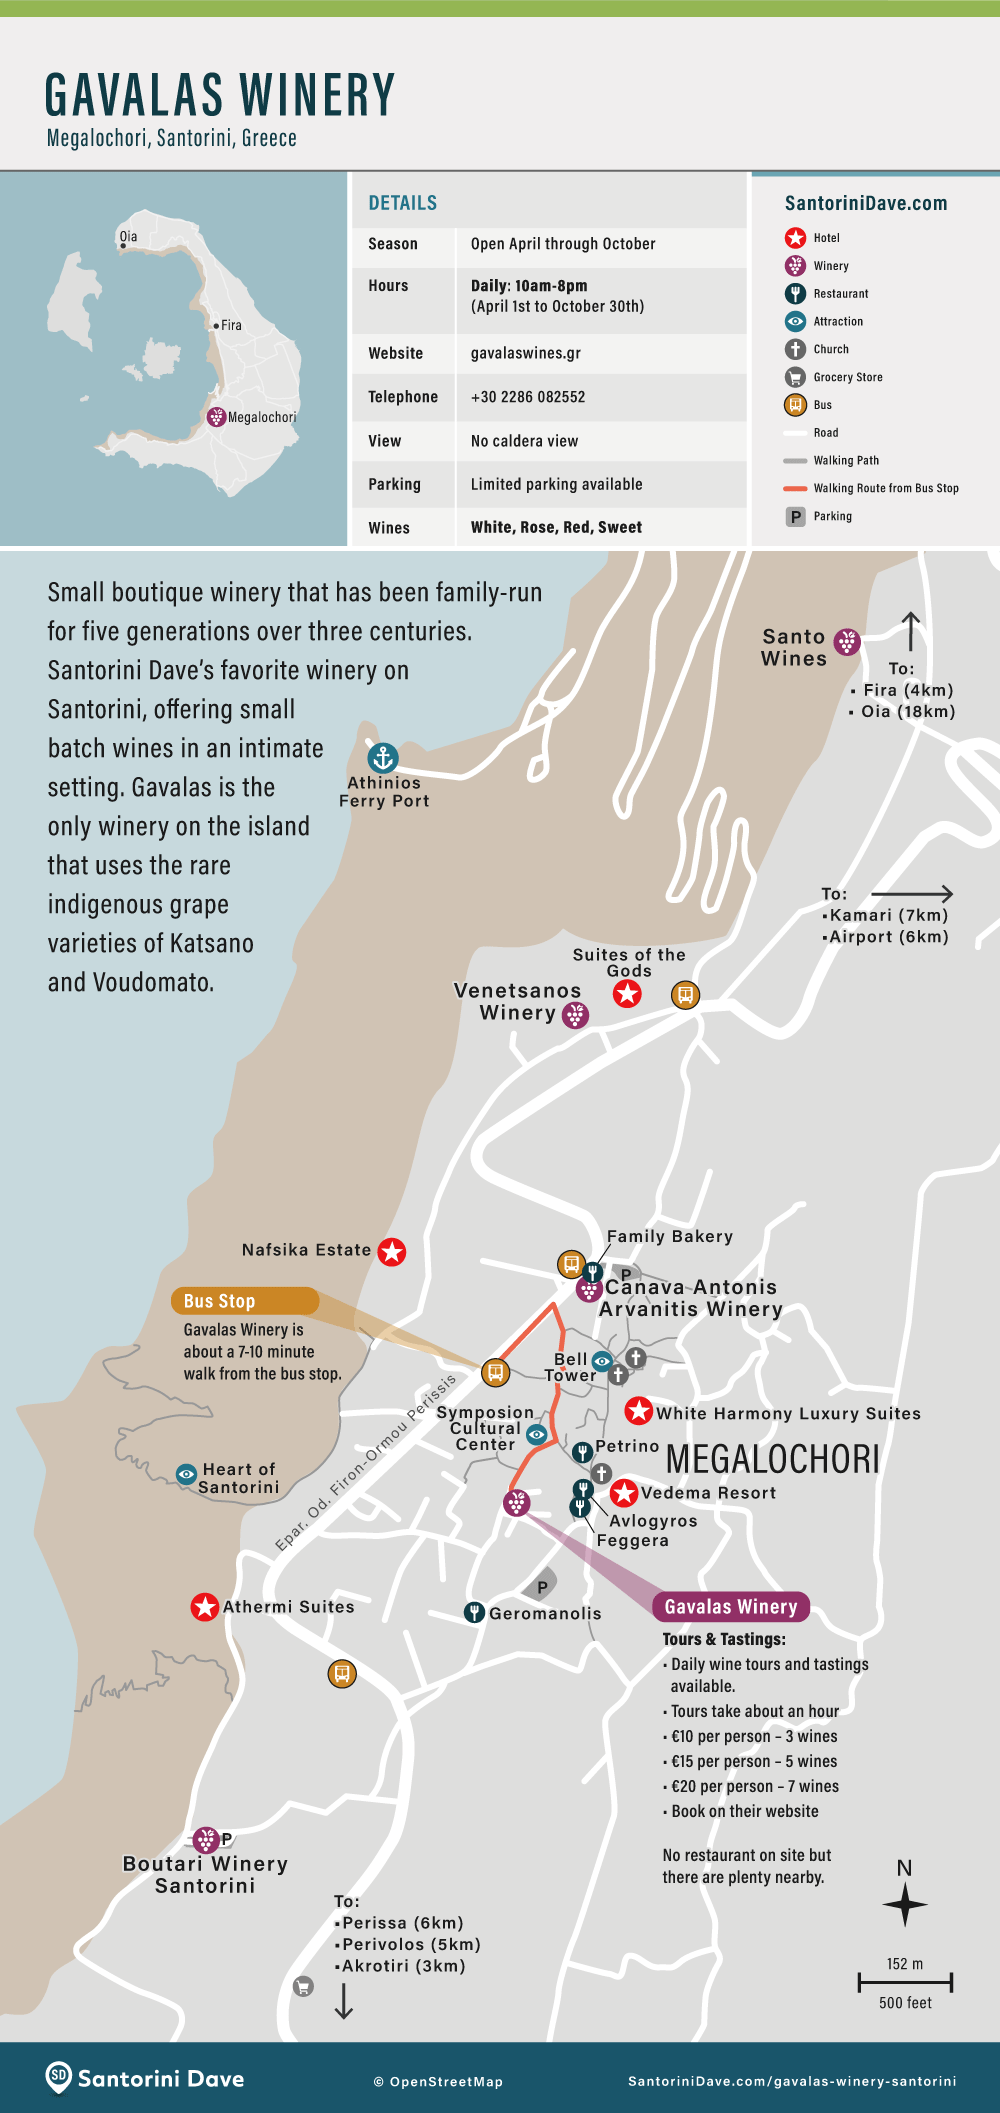 Map of the area surrounding Gavalas Winery in Santorini